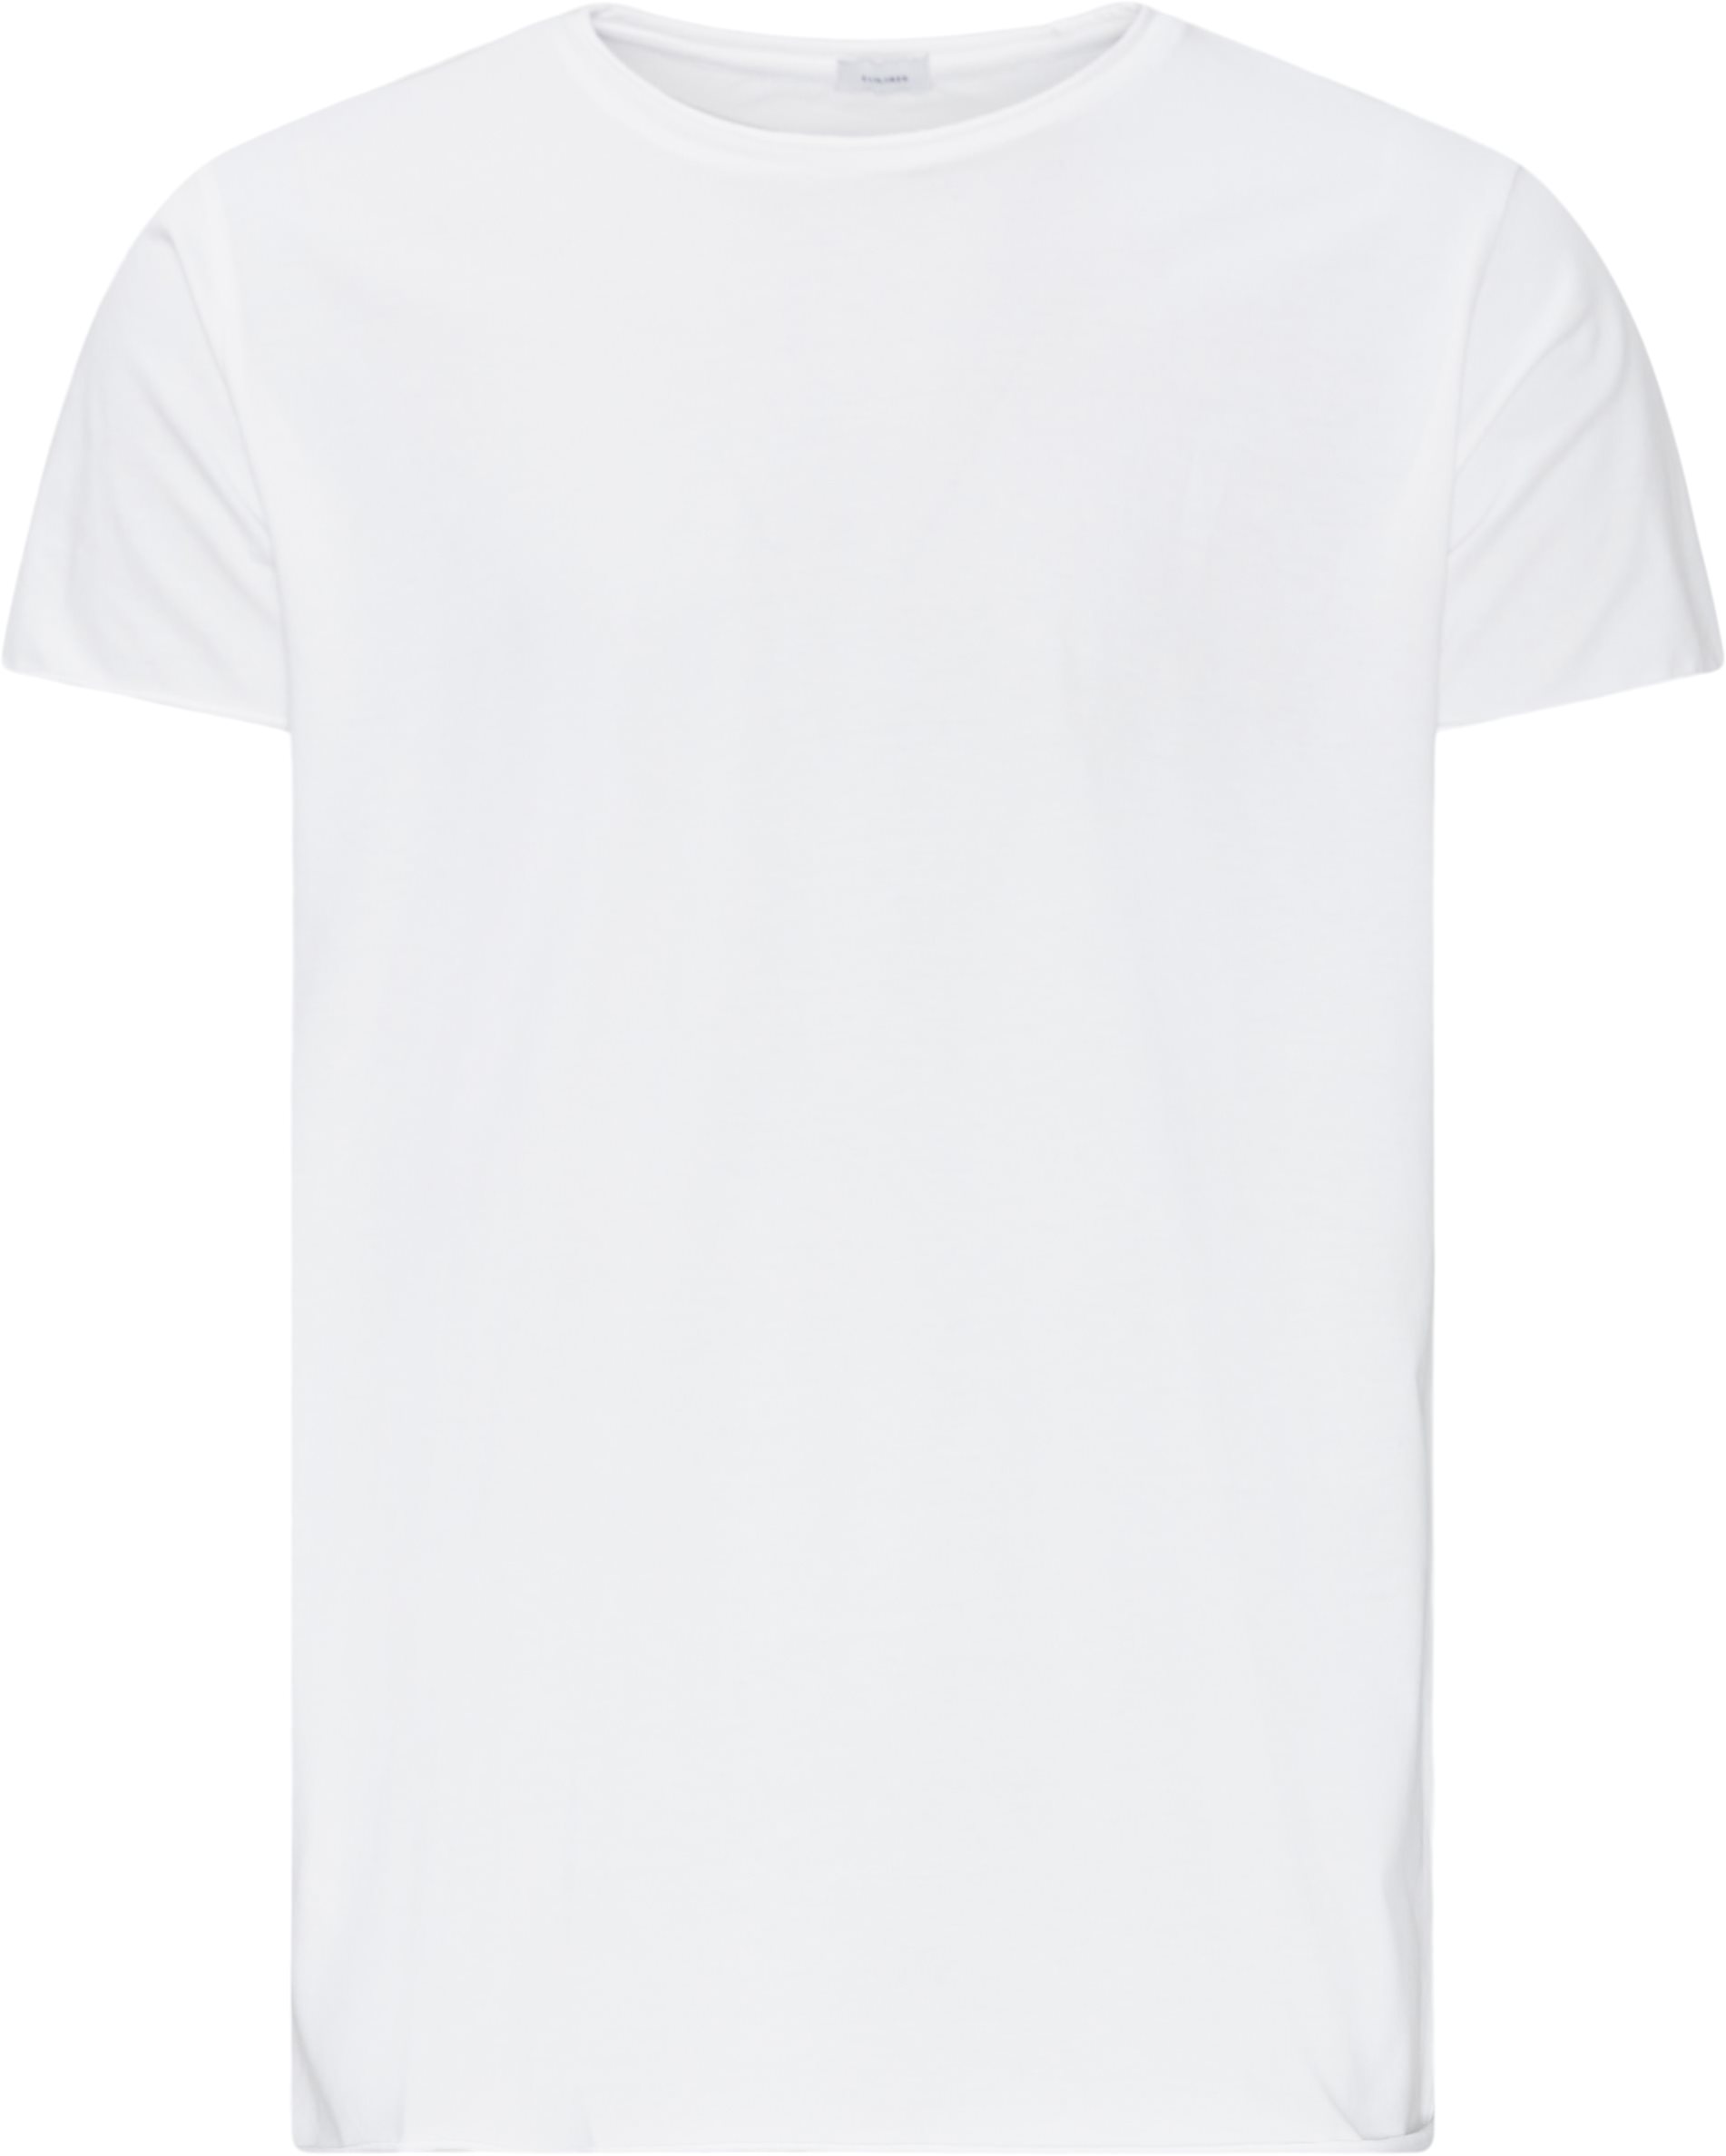 Raw Edge Tee - T-shirts - Regular fit - Hvid